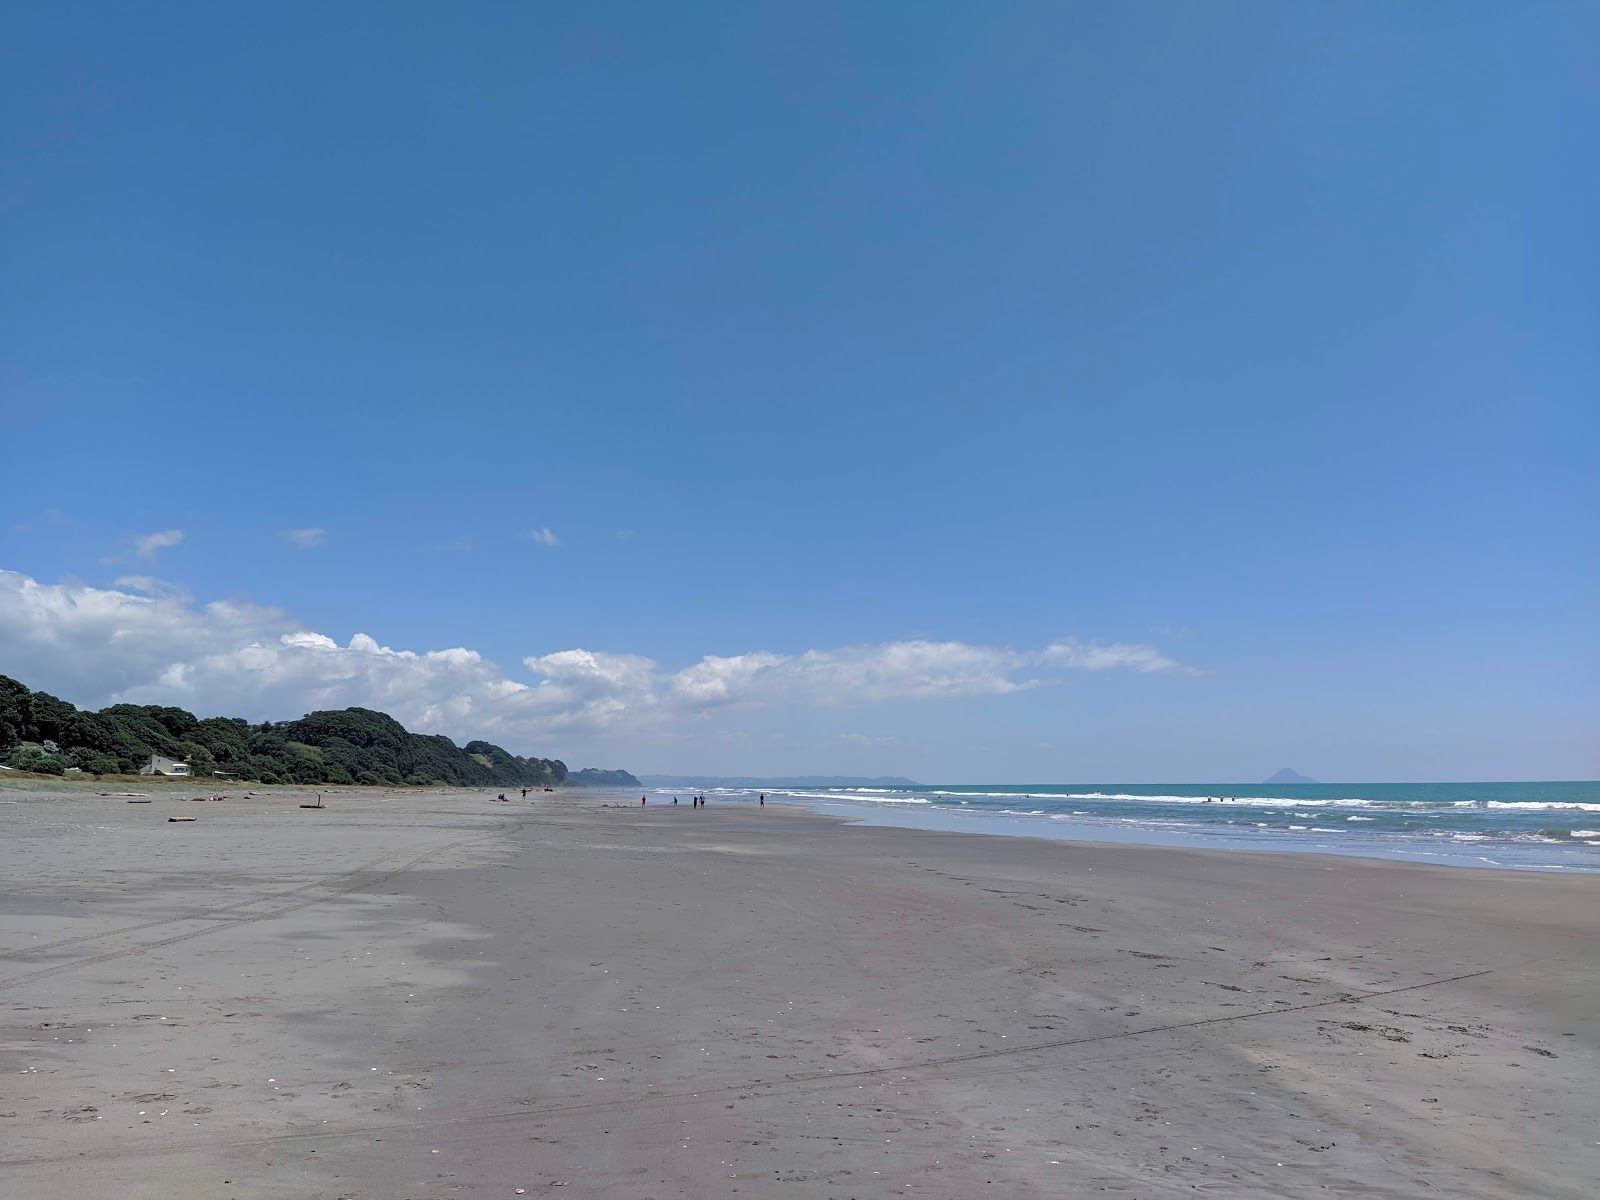 Photo of Waiotahe Beach with gray sand surface